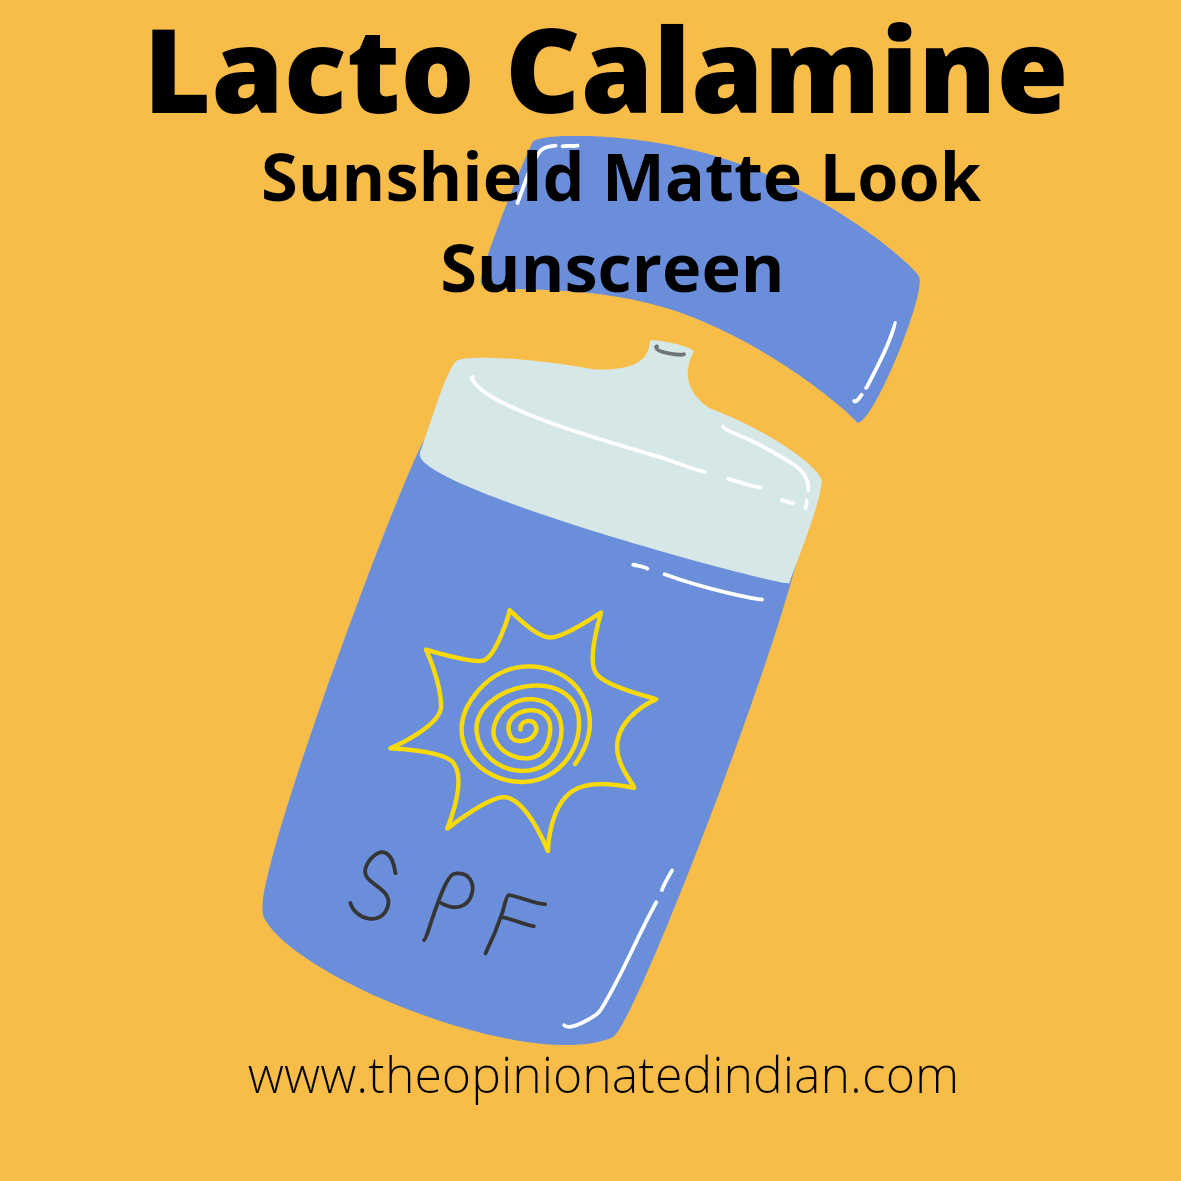 Lacto Calamine Sunshield Matte Look Sunscreen